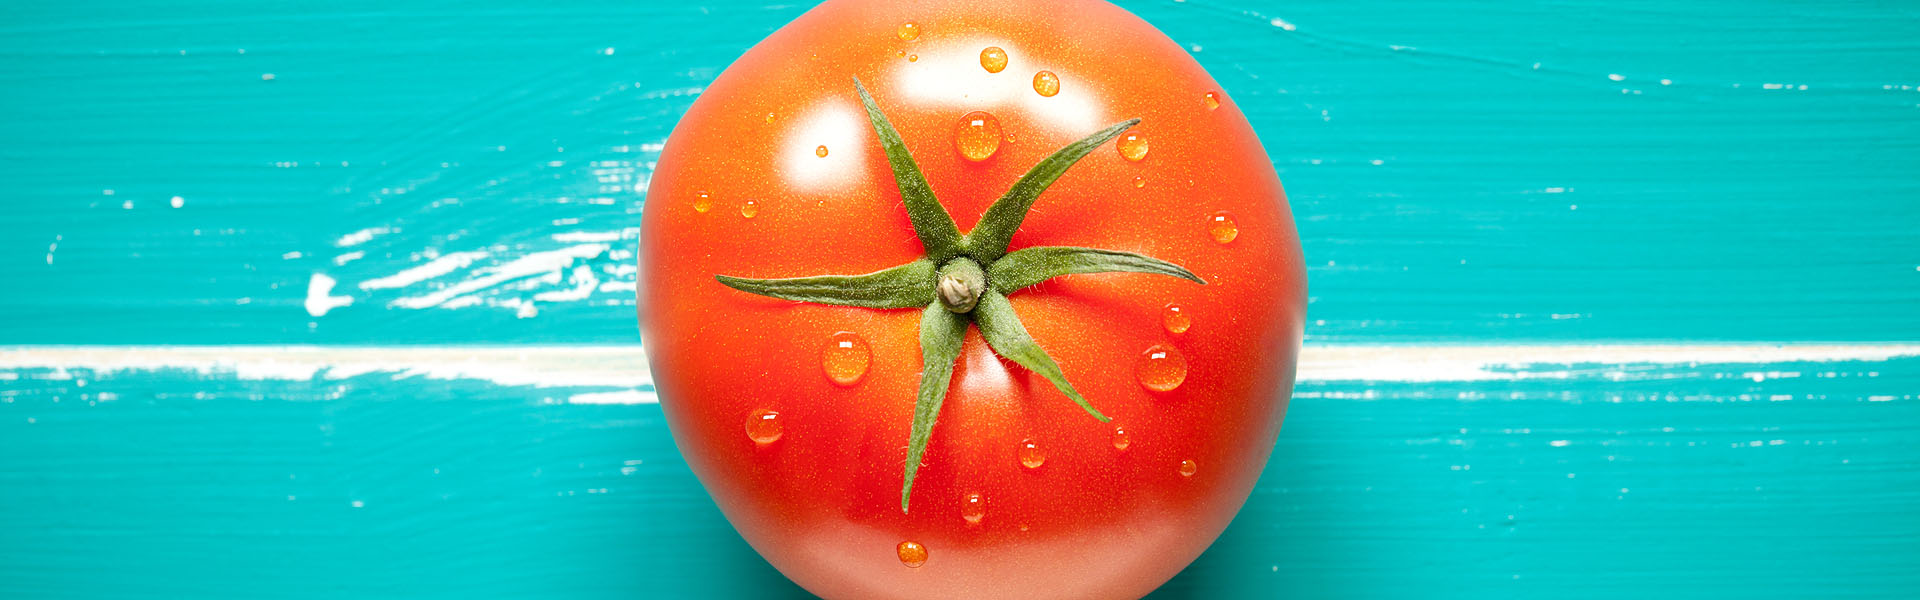 pomidory_deski_1_uniw